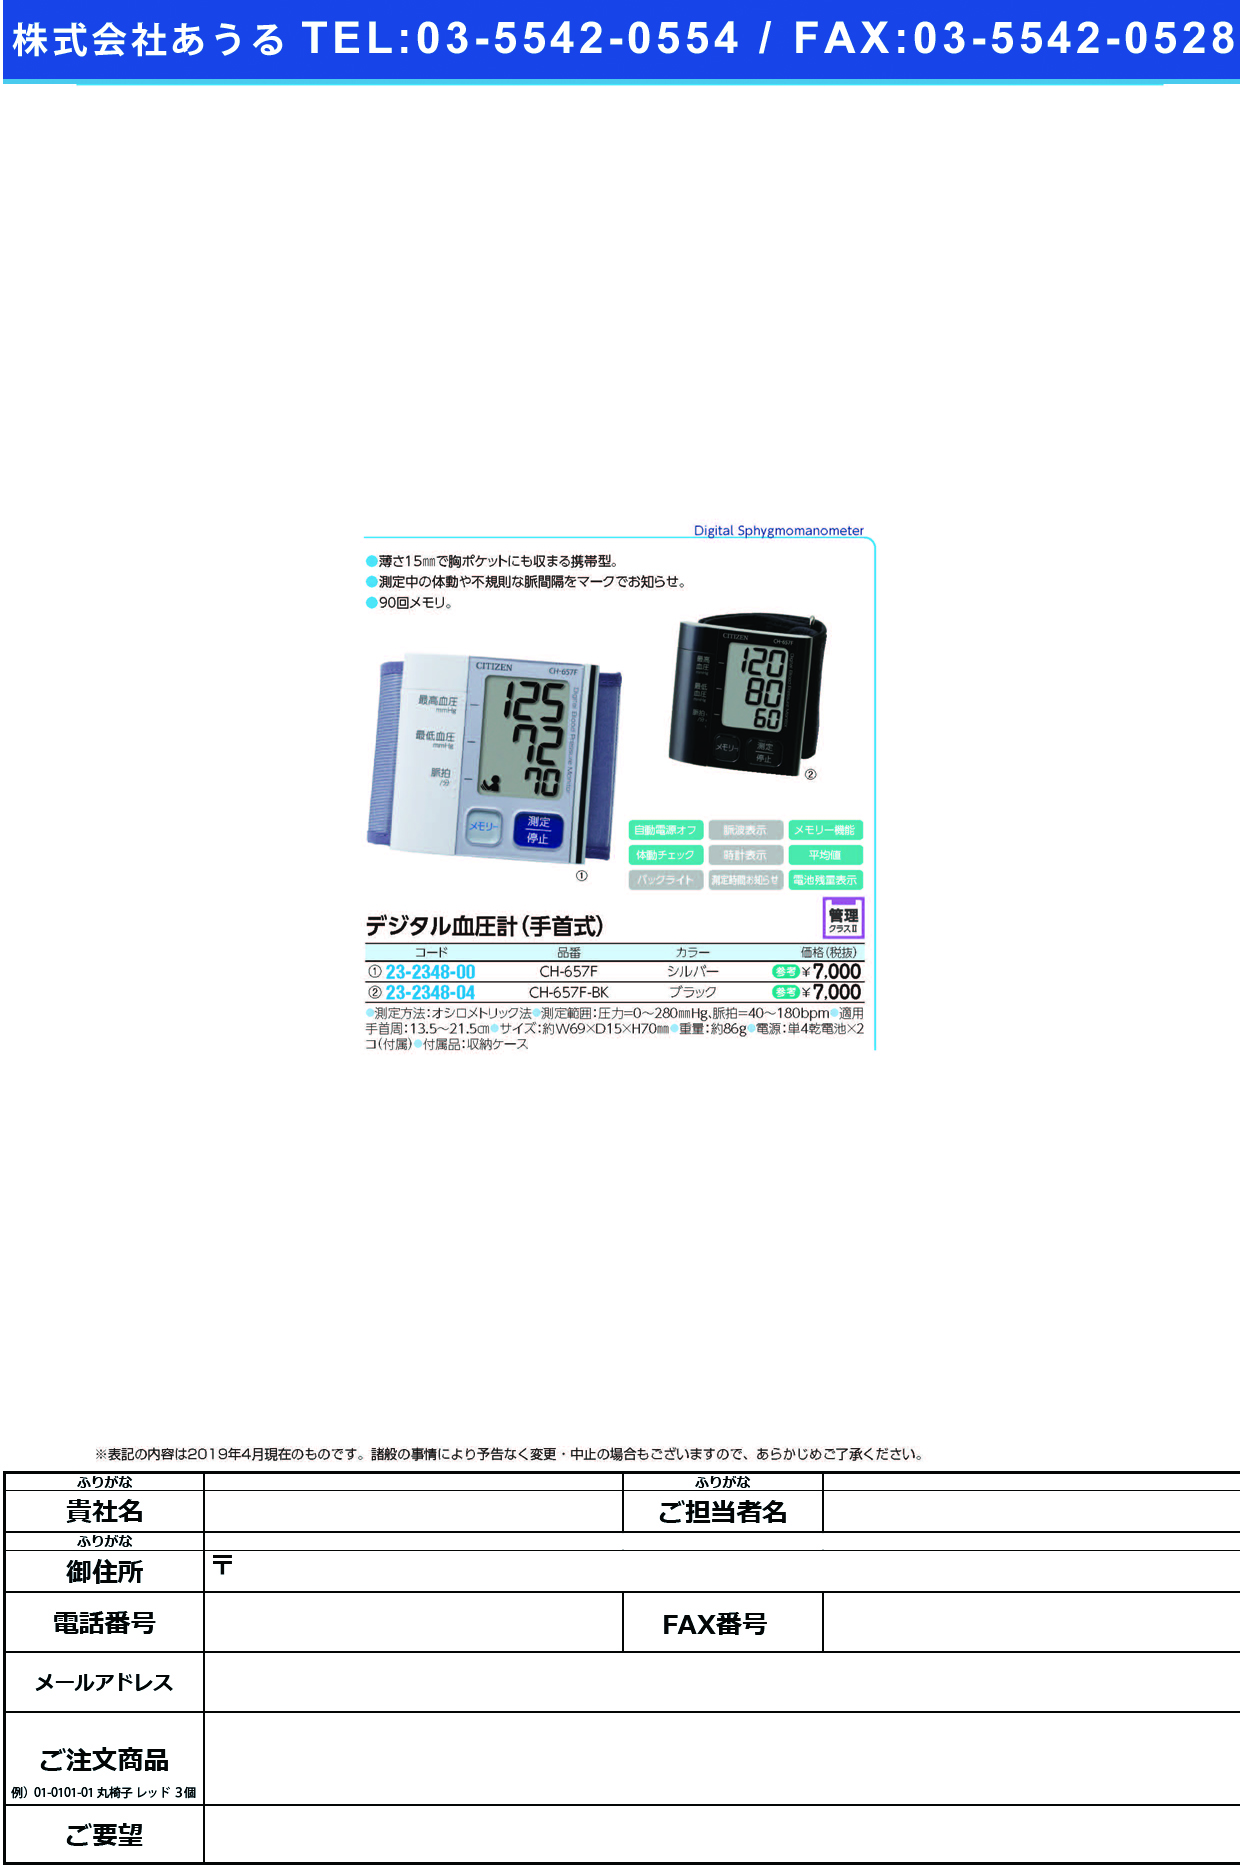 (23-2348-04)シチズン電子血圧計（手首式） CH-657F-BK(ﾌﾞﾗｯｸ) ｼﾁｽﾞﾝﾃﾞﾝｼｹﾂｱﾂｹｲ(ﾃｸﾋﾞ【1台単位】【2019年カタログ商品】